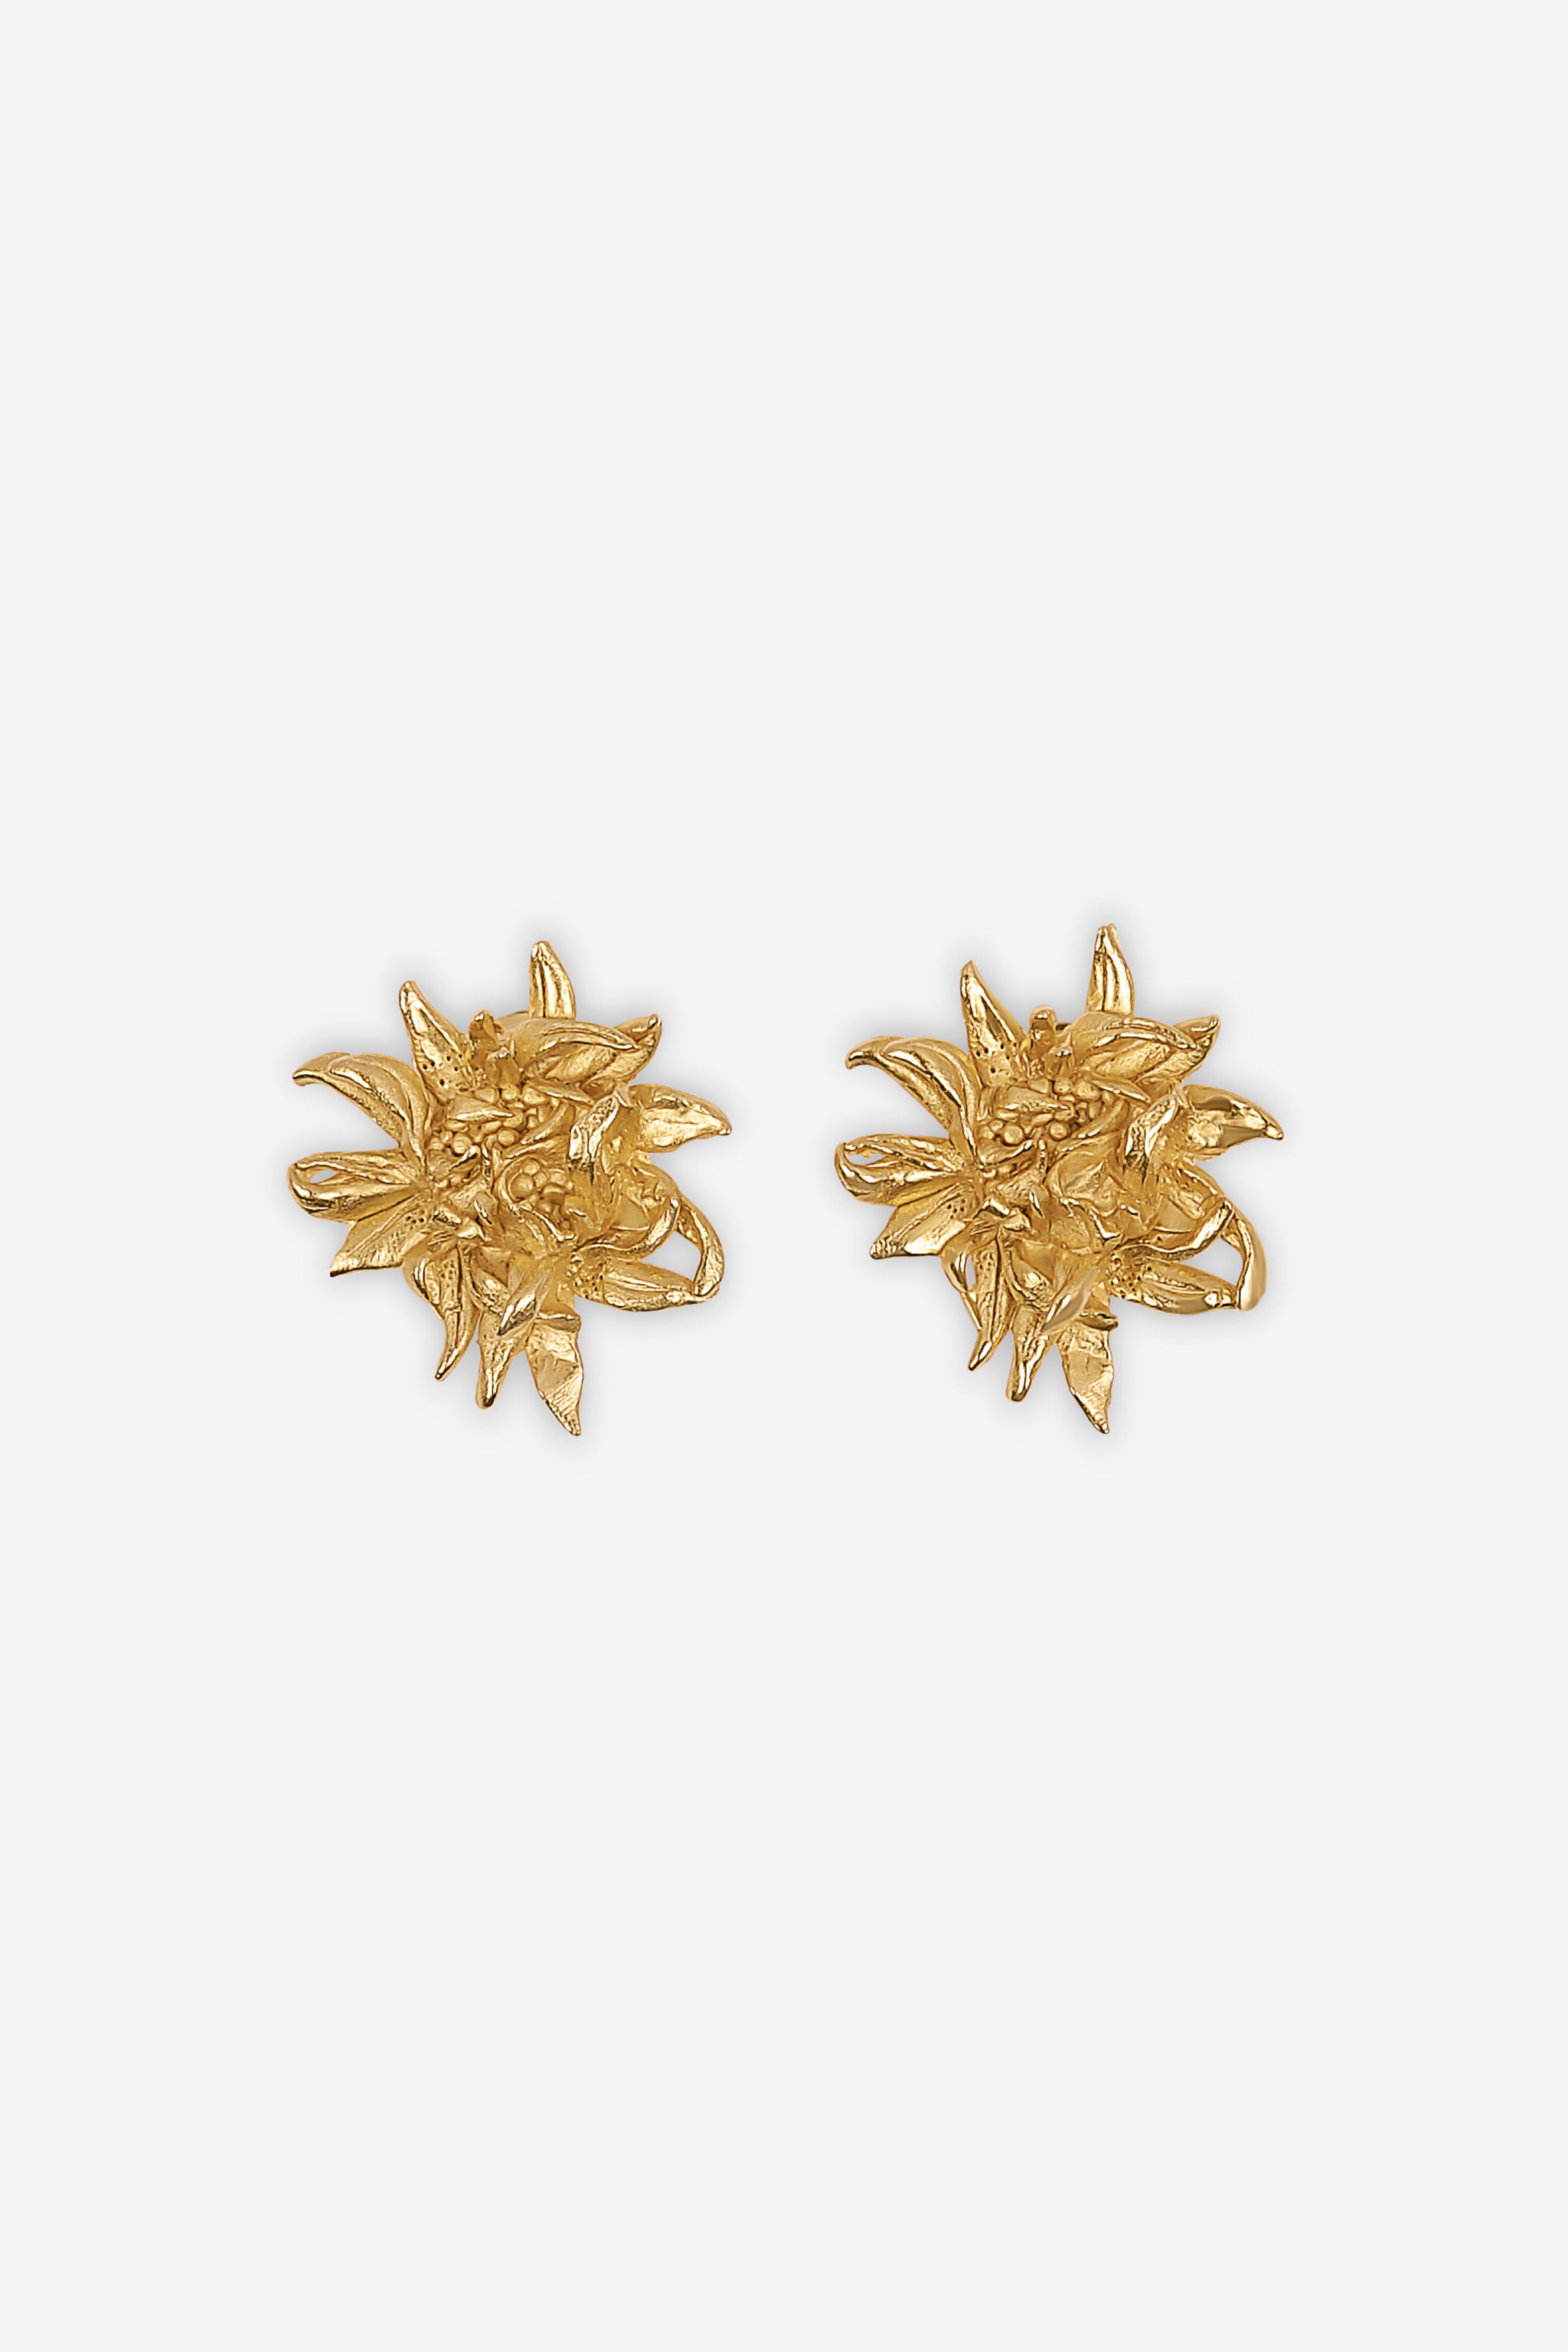 Gold flower clips